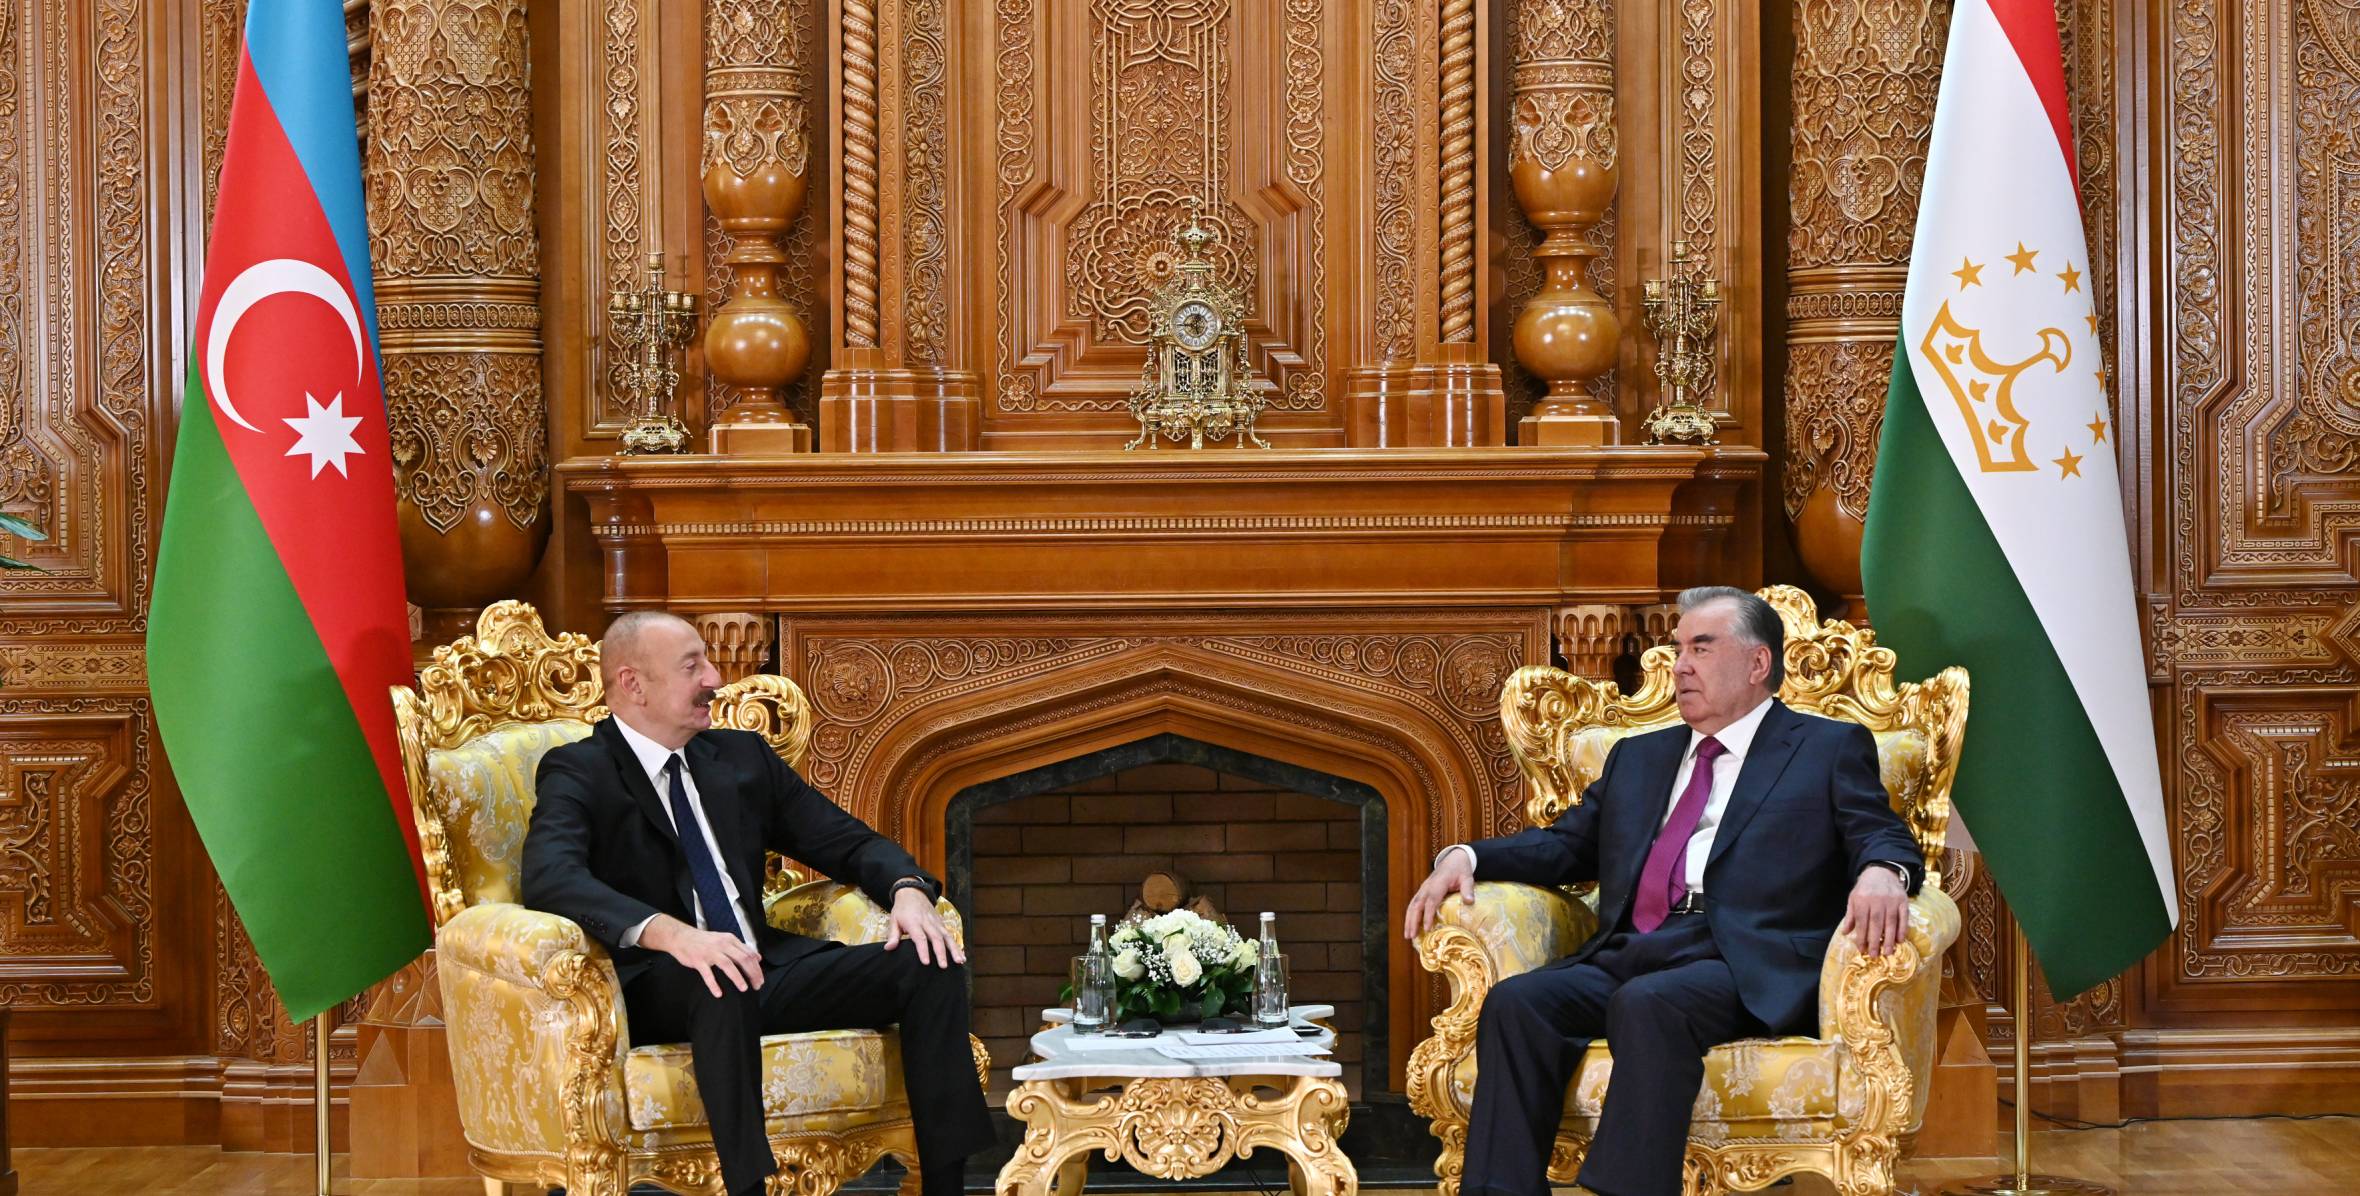 Ilham Aliyev held one-on-one meeting with President of Tajikistan Emomali Rahmon in Dushanbe